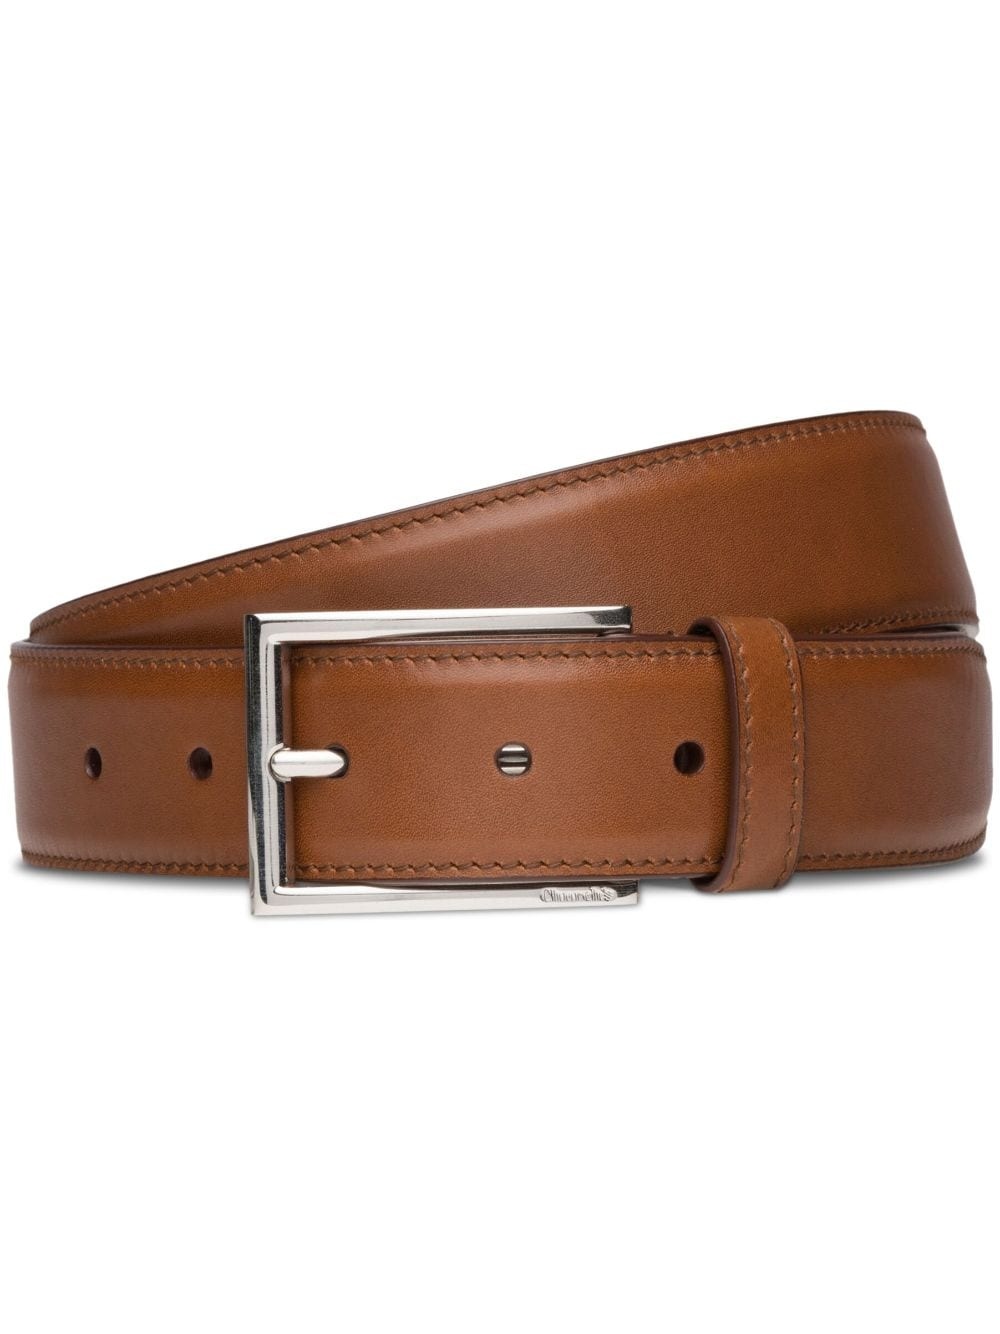 Nevada leather belt - 1